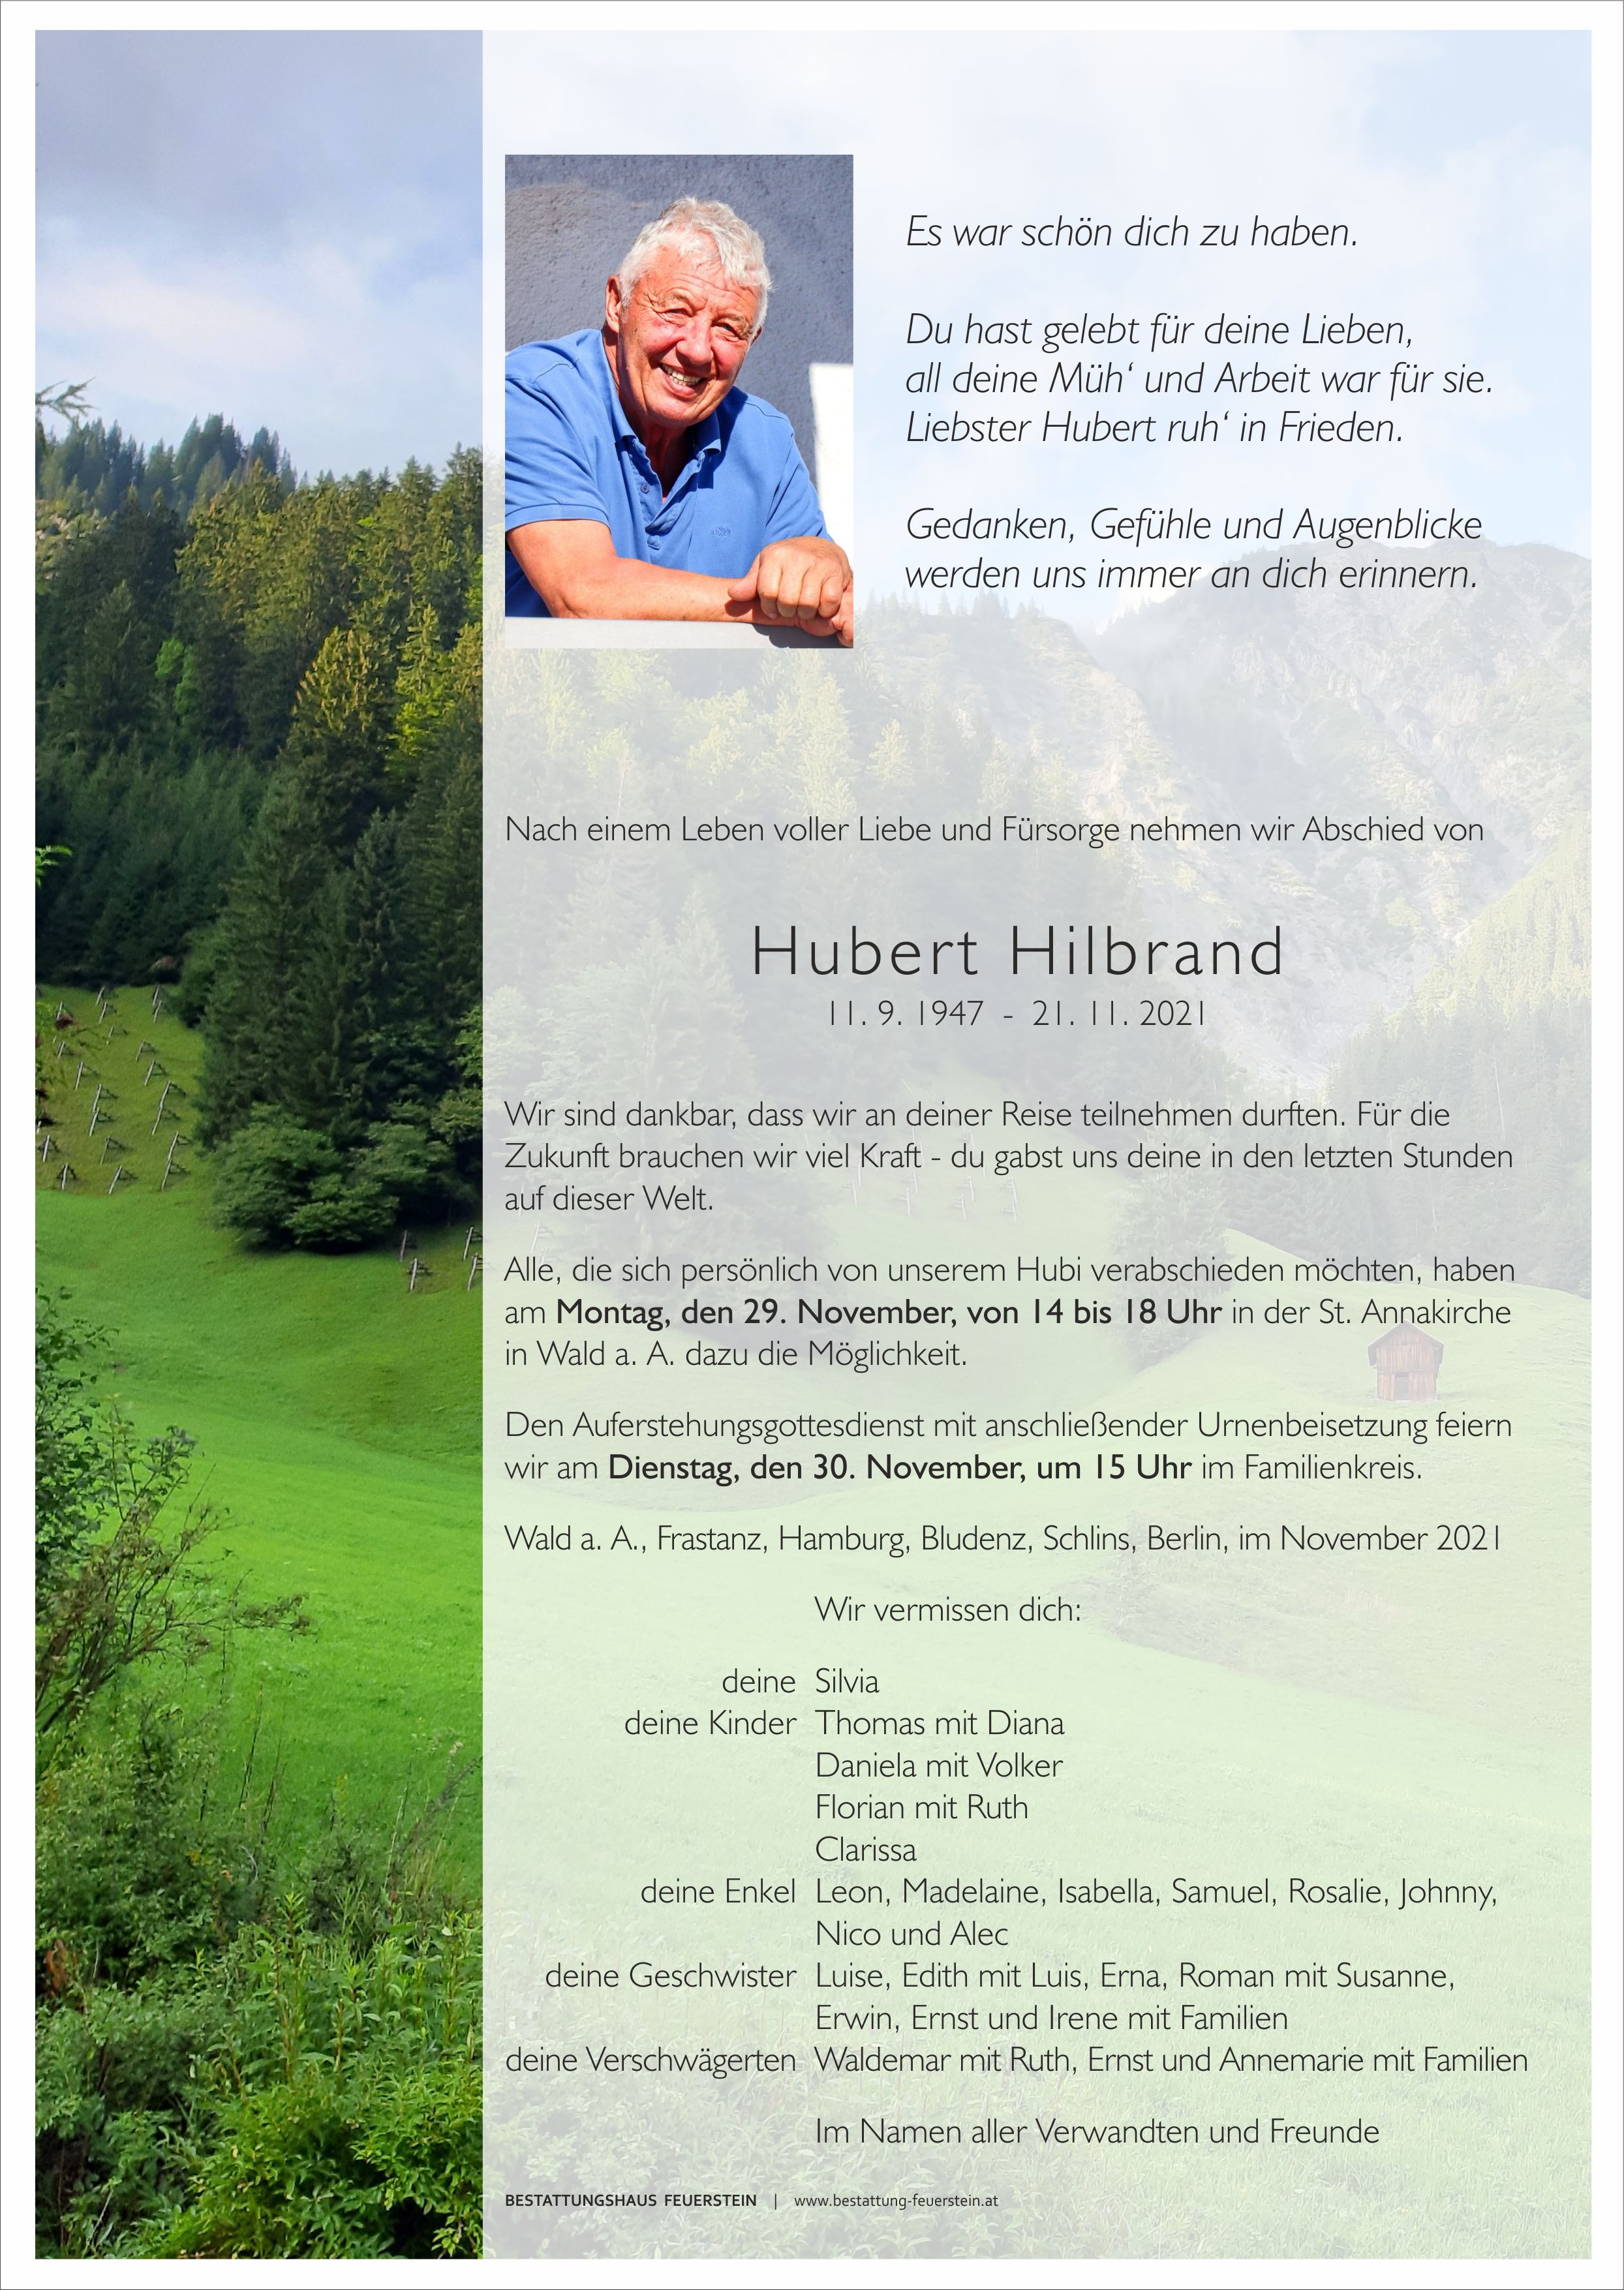 Hubert Hilbrand